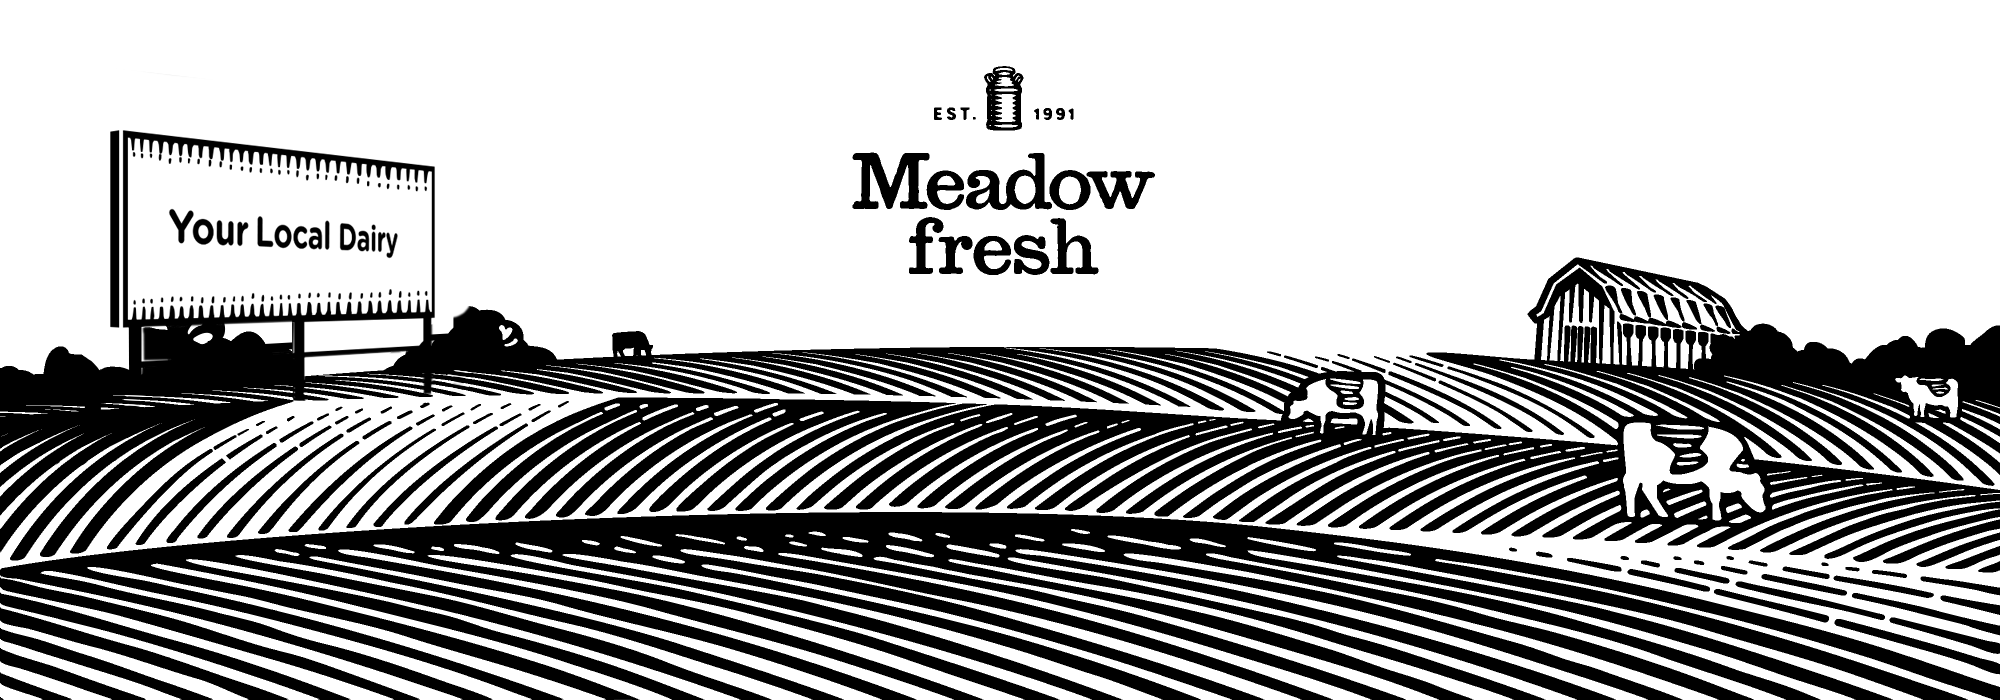 Meadowfresh Dairy: Masthead